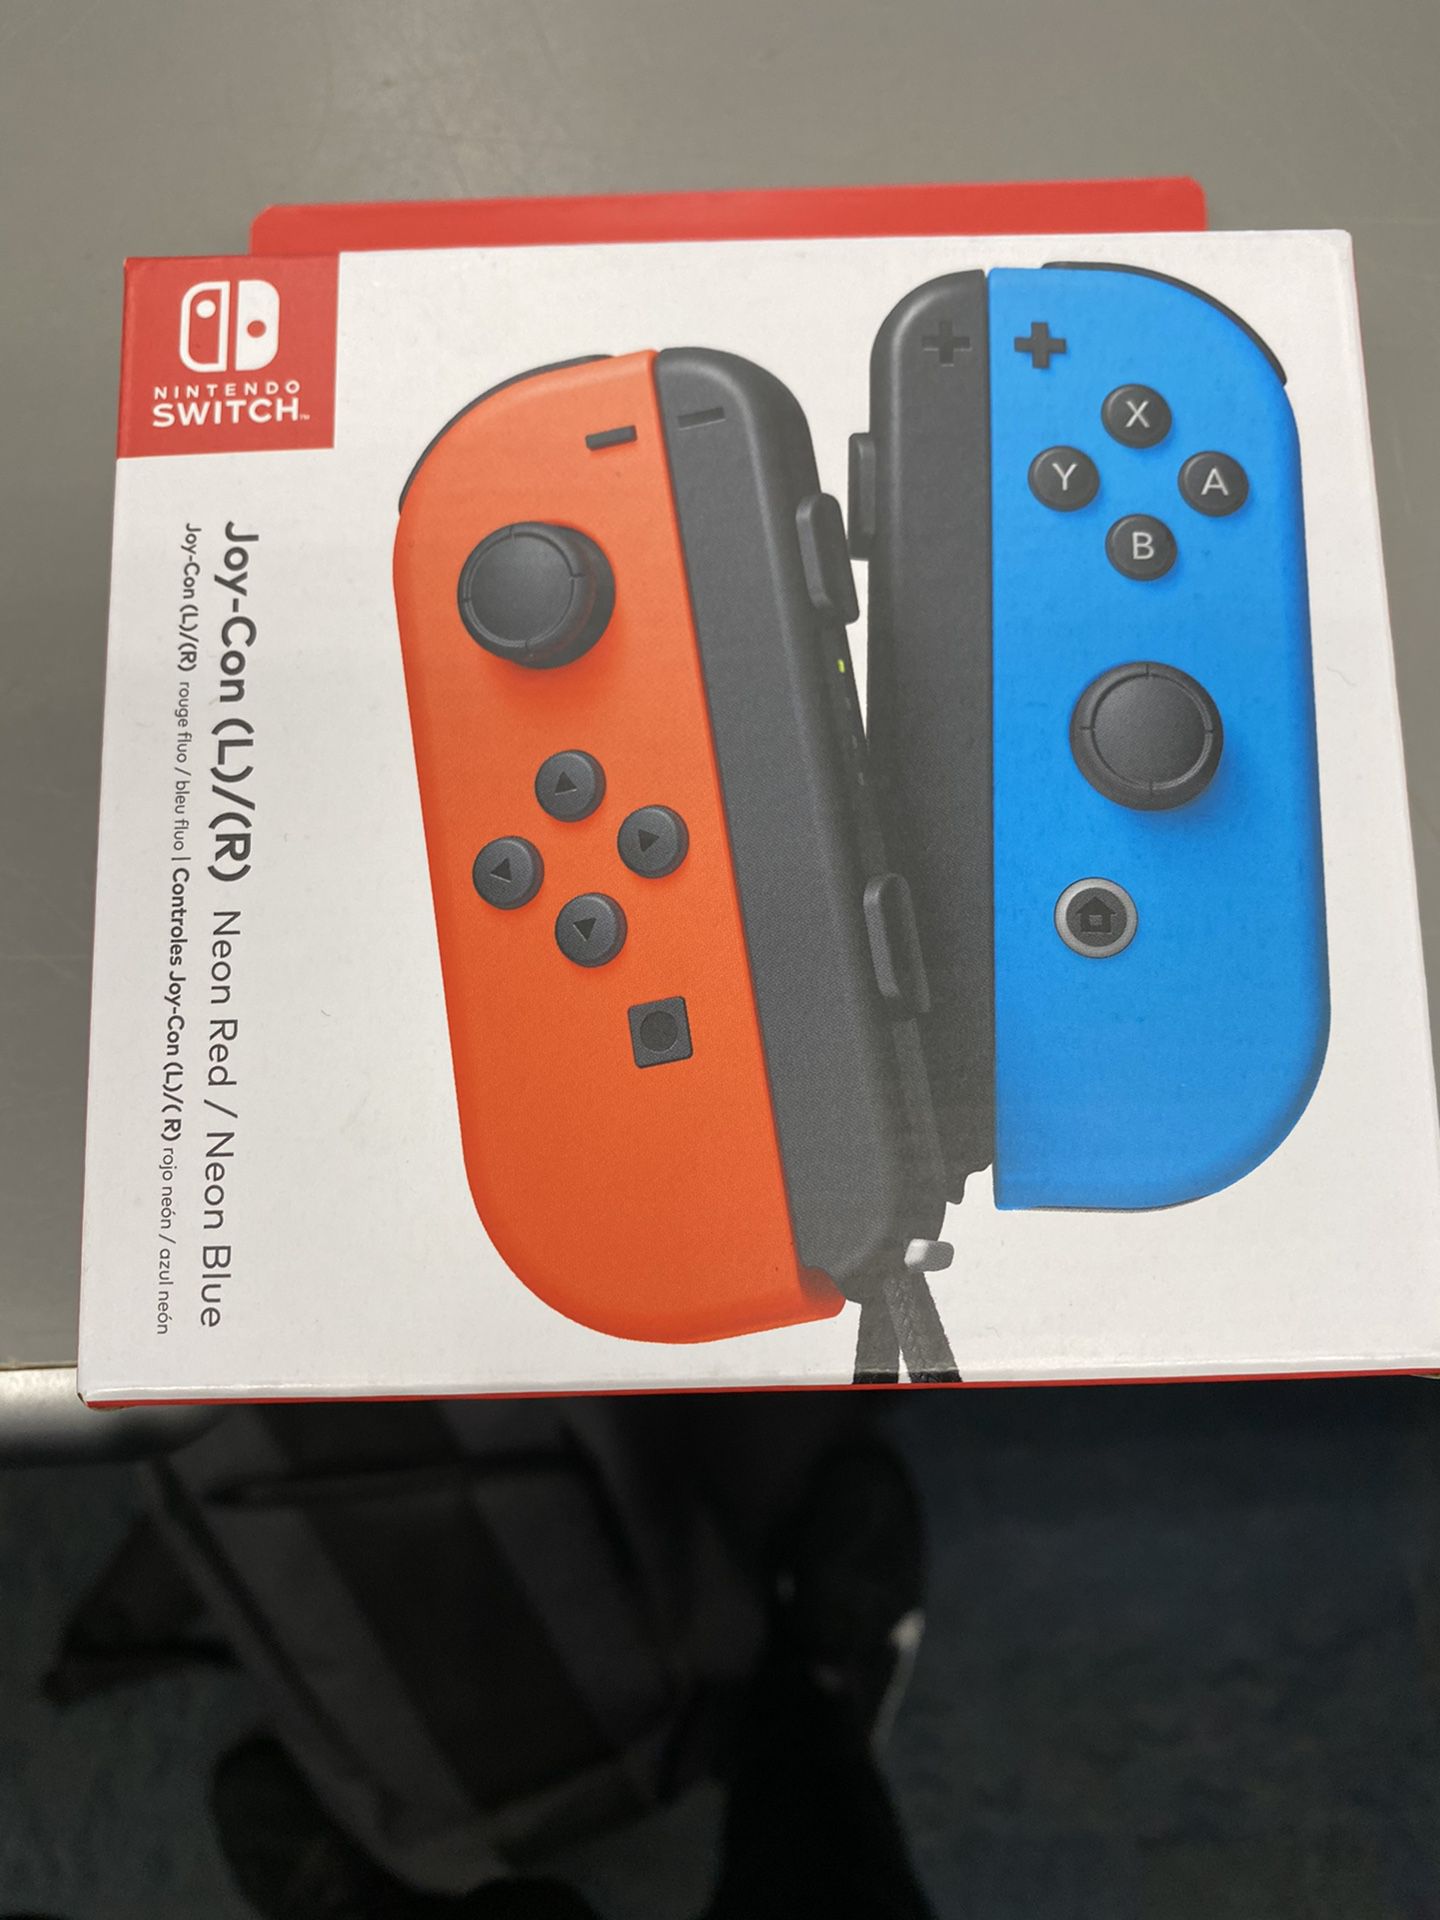 Brand new Nintendo Switch joy cons